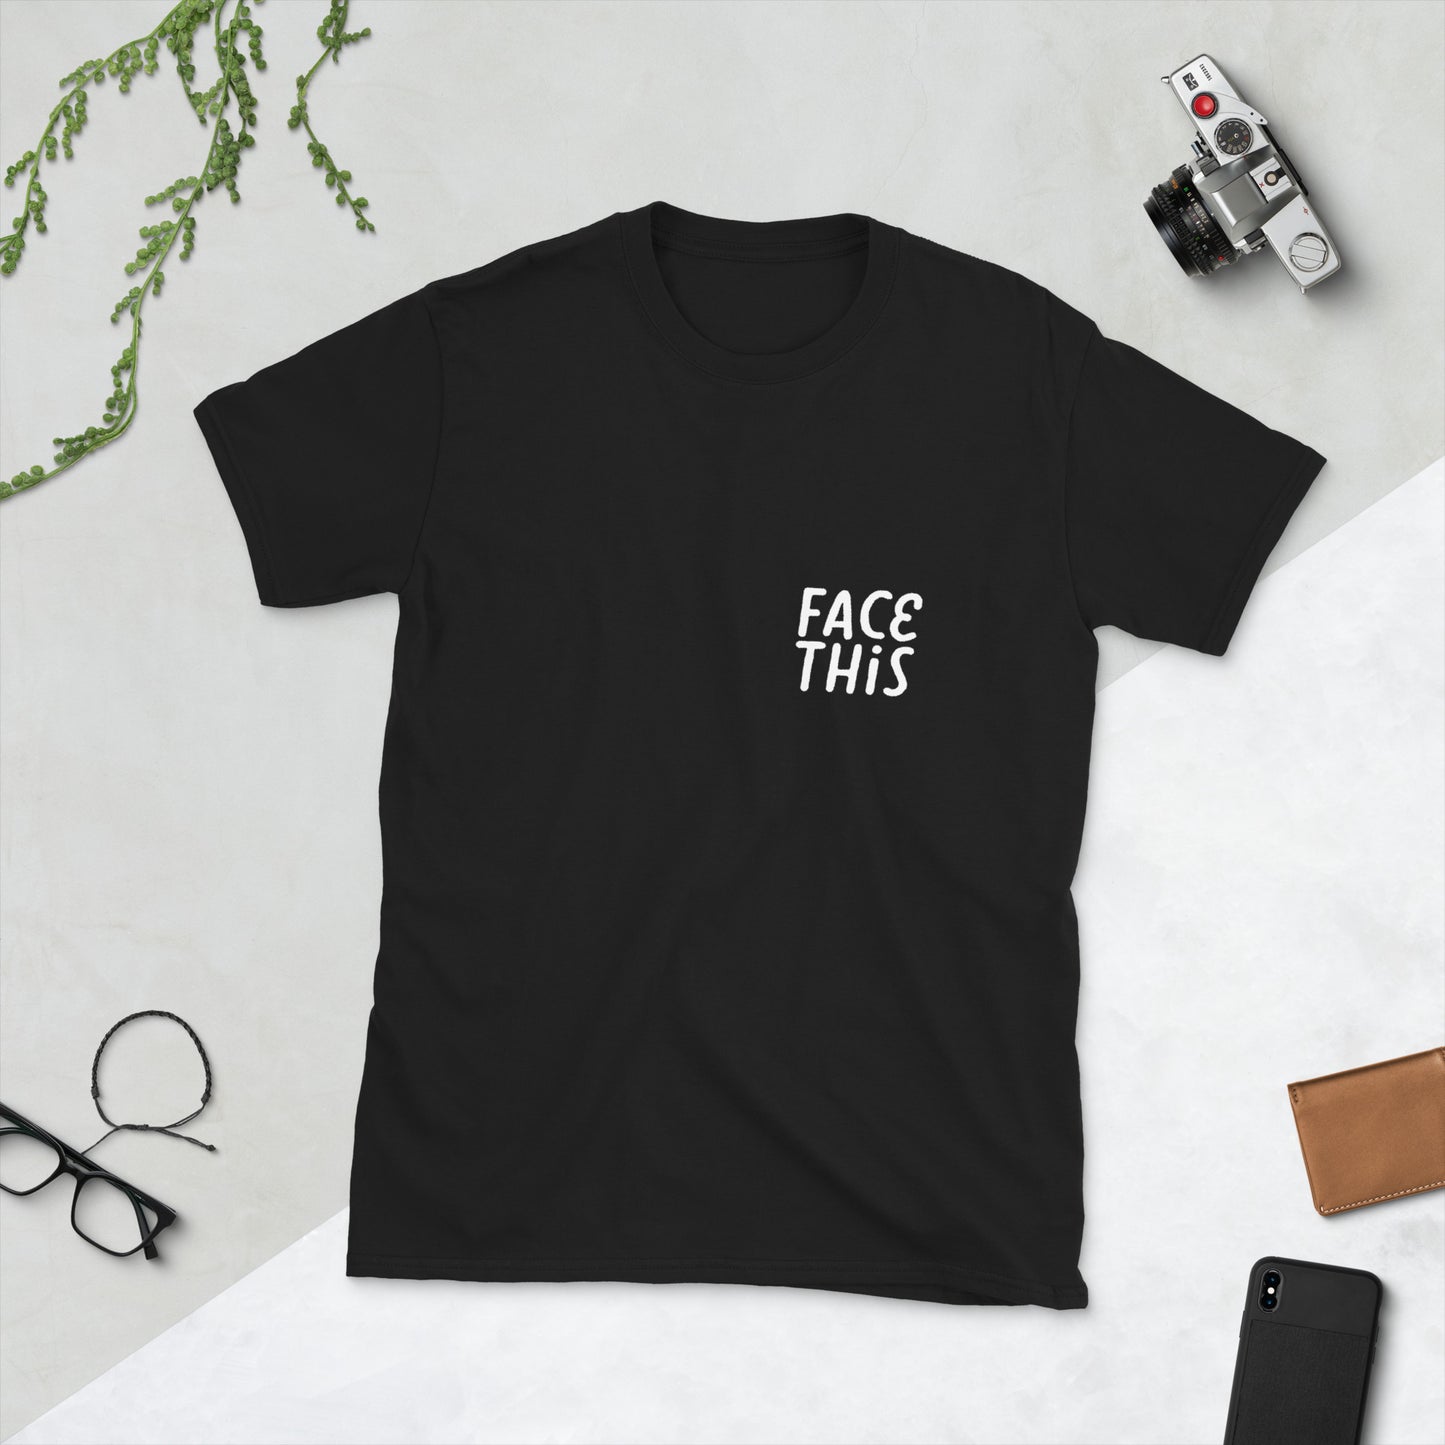 Liv Lee x Face This T-shirt